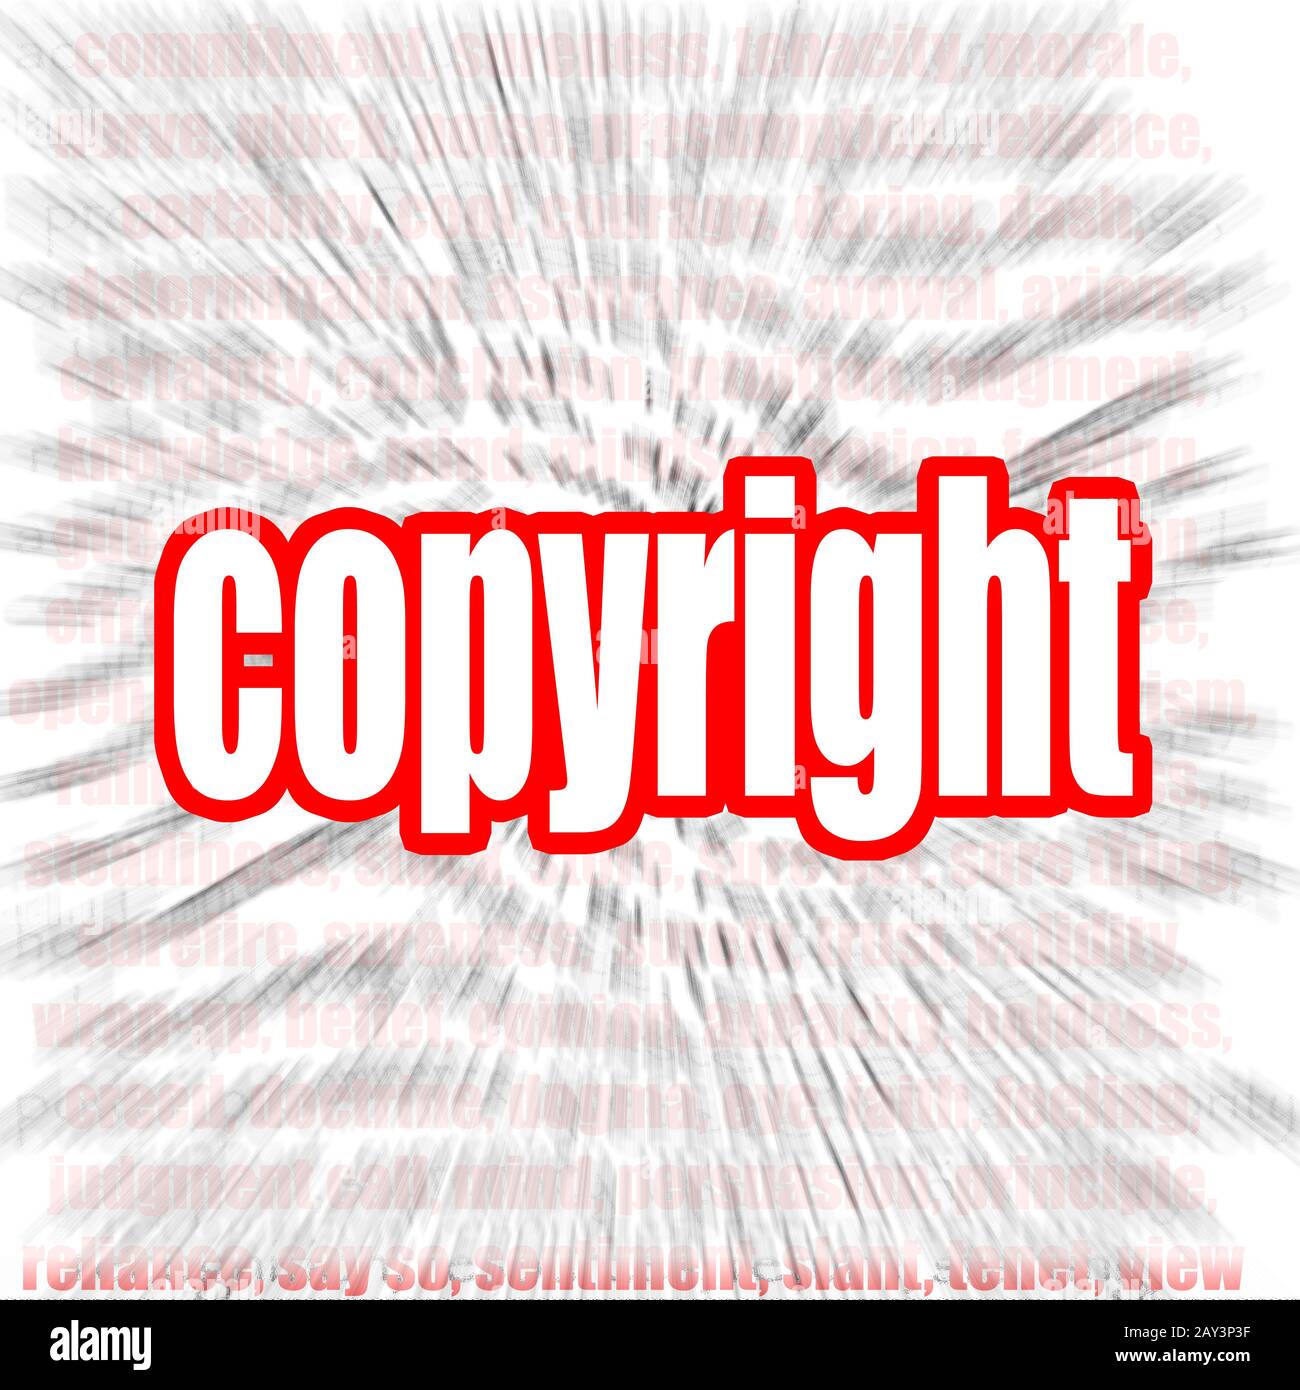 Copyright word cloud Stock Photo